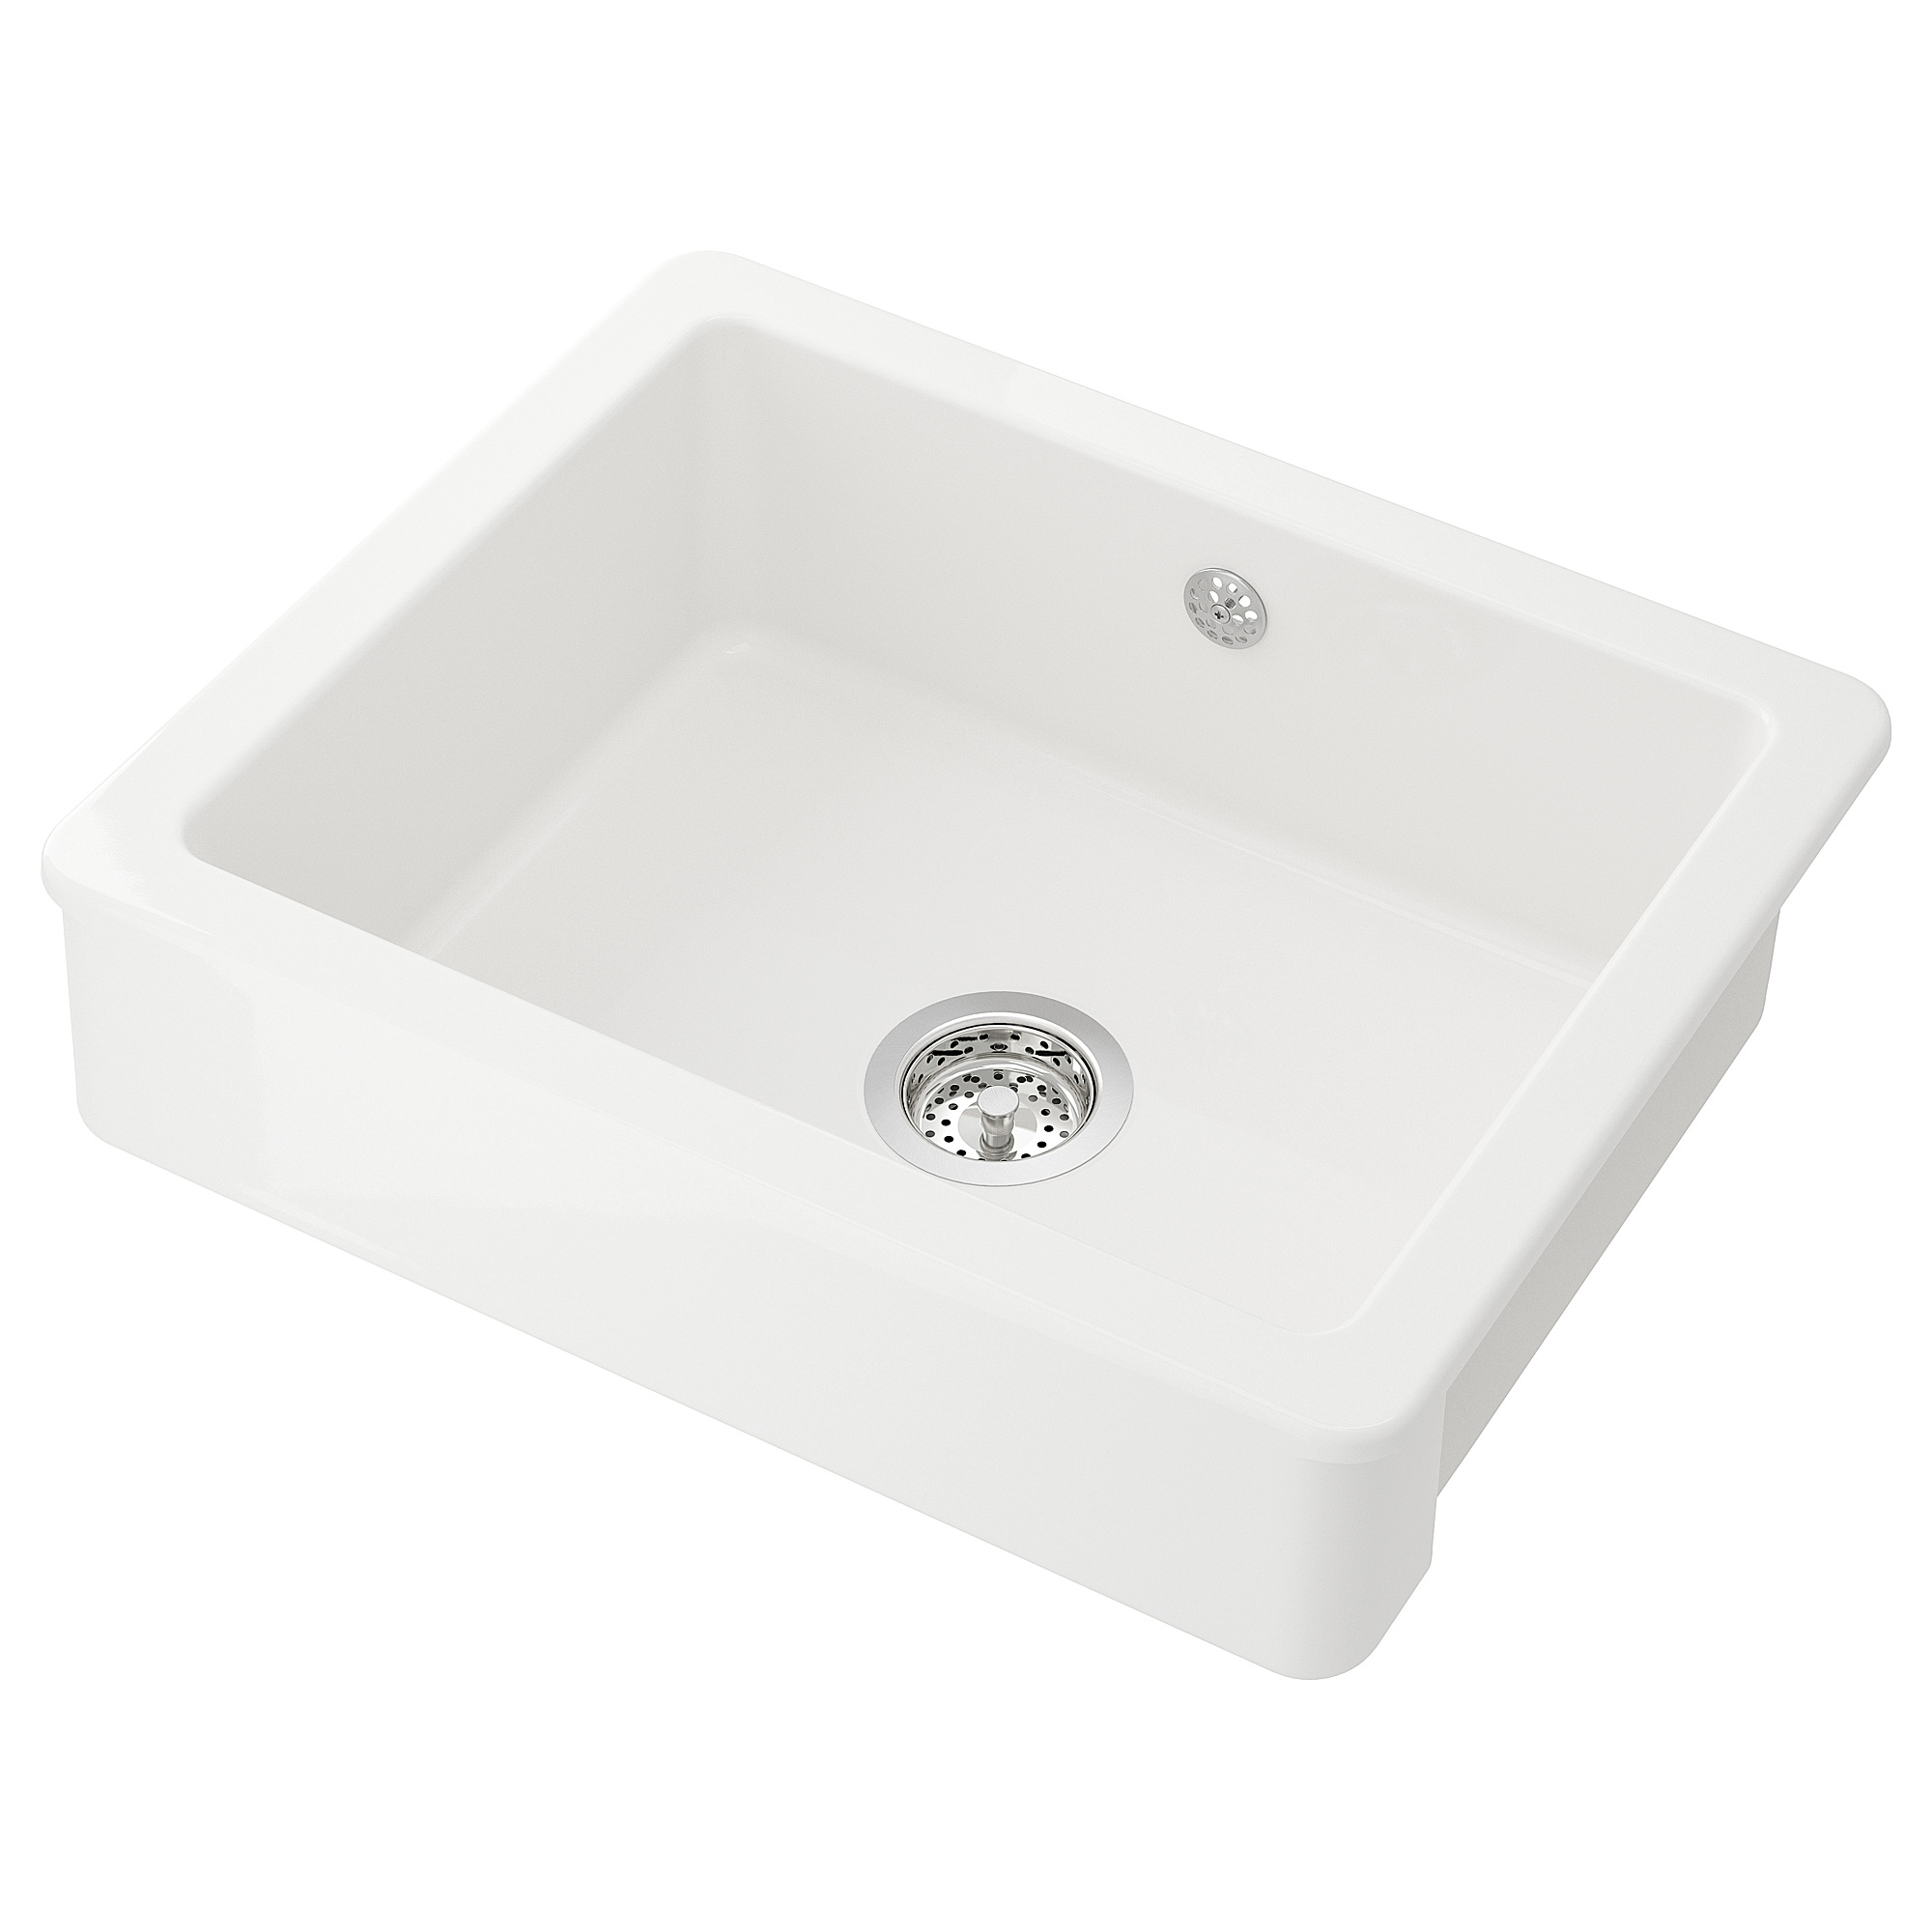 HAVSEN sink bowl w visible front